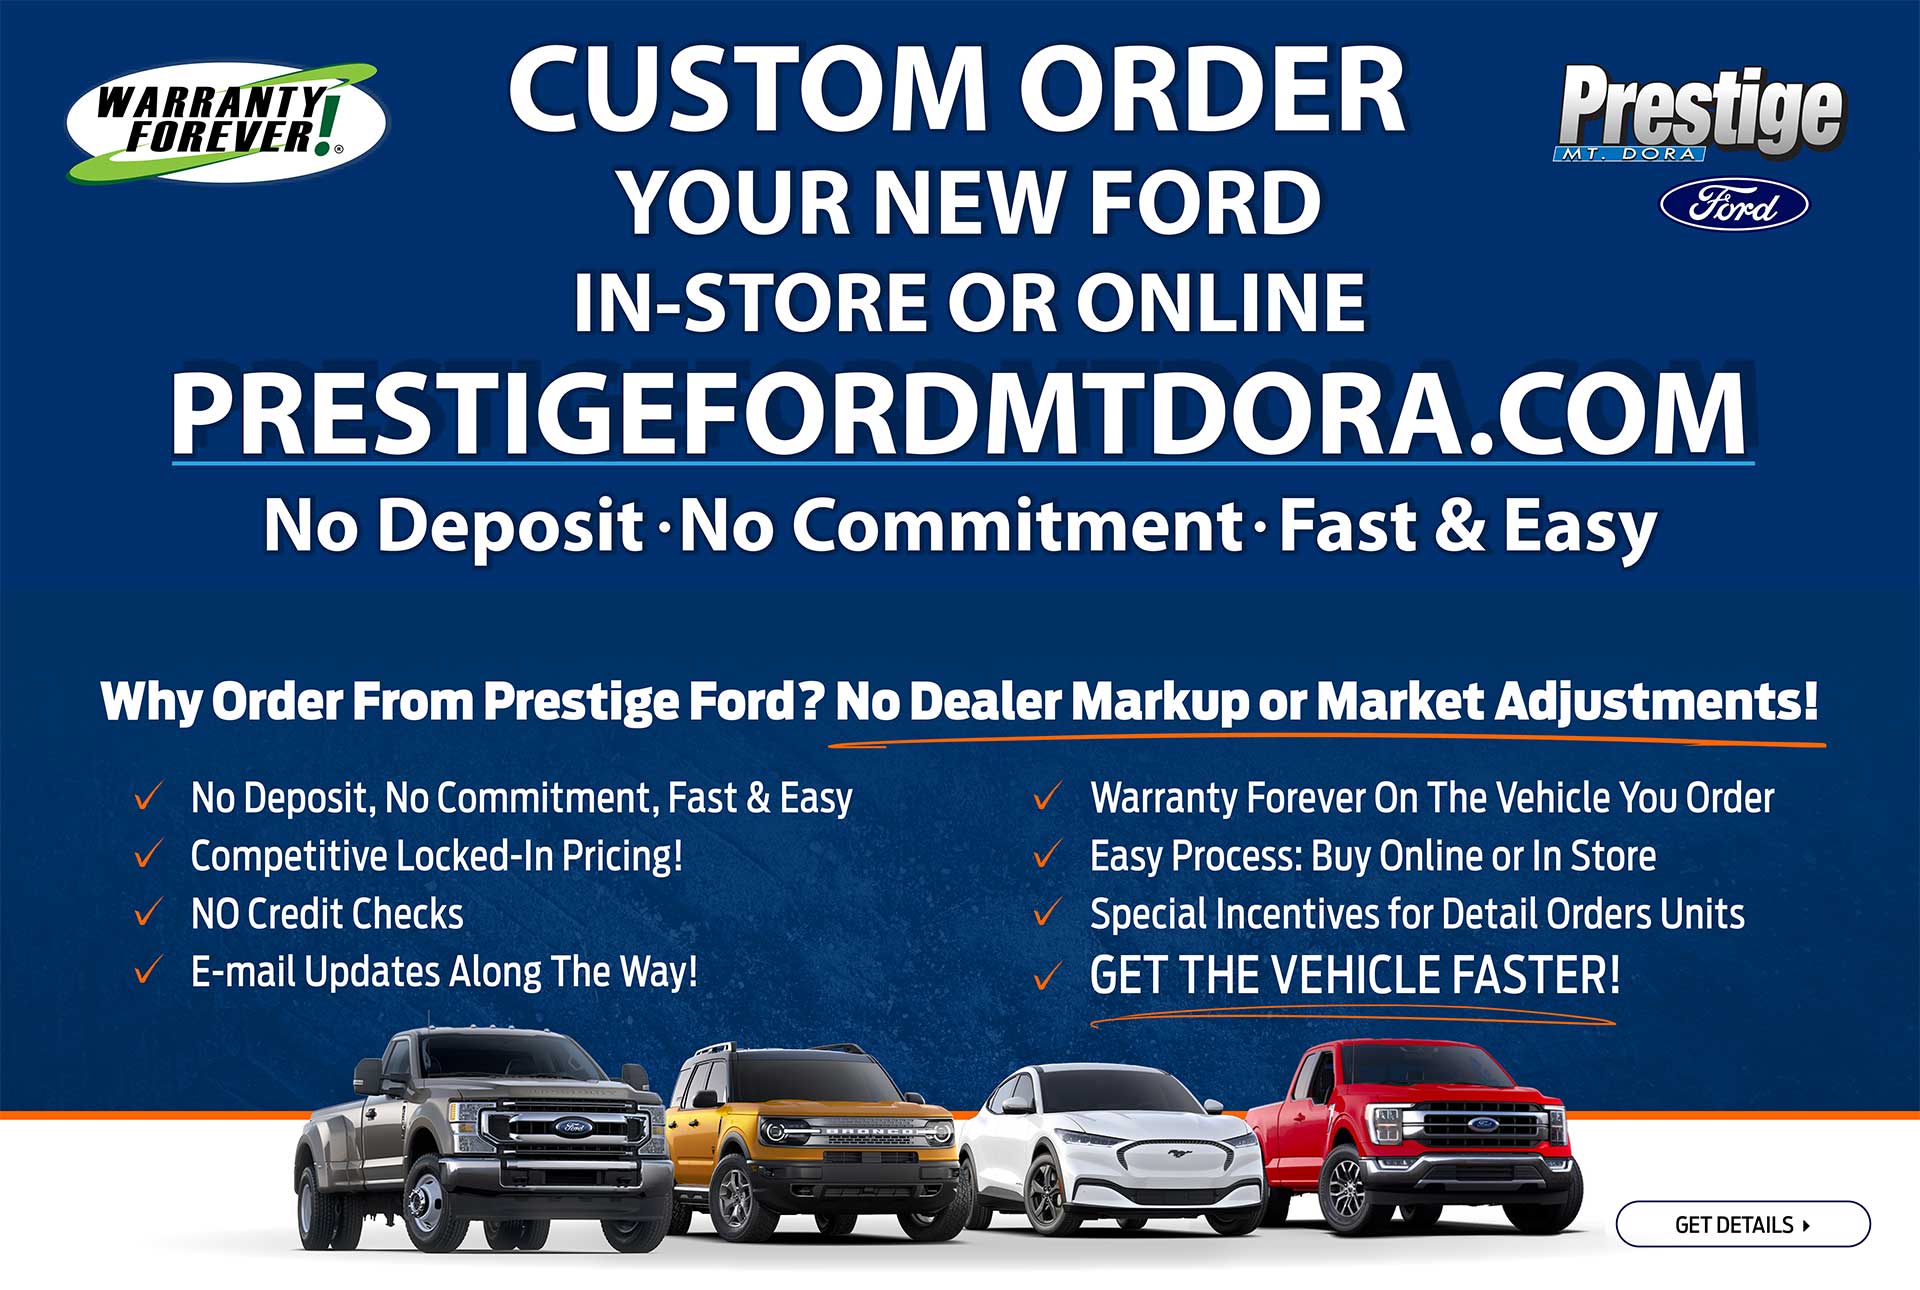 Prestige Ford of Mount Dora - Florida - Custom Order A New Ford Online